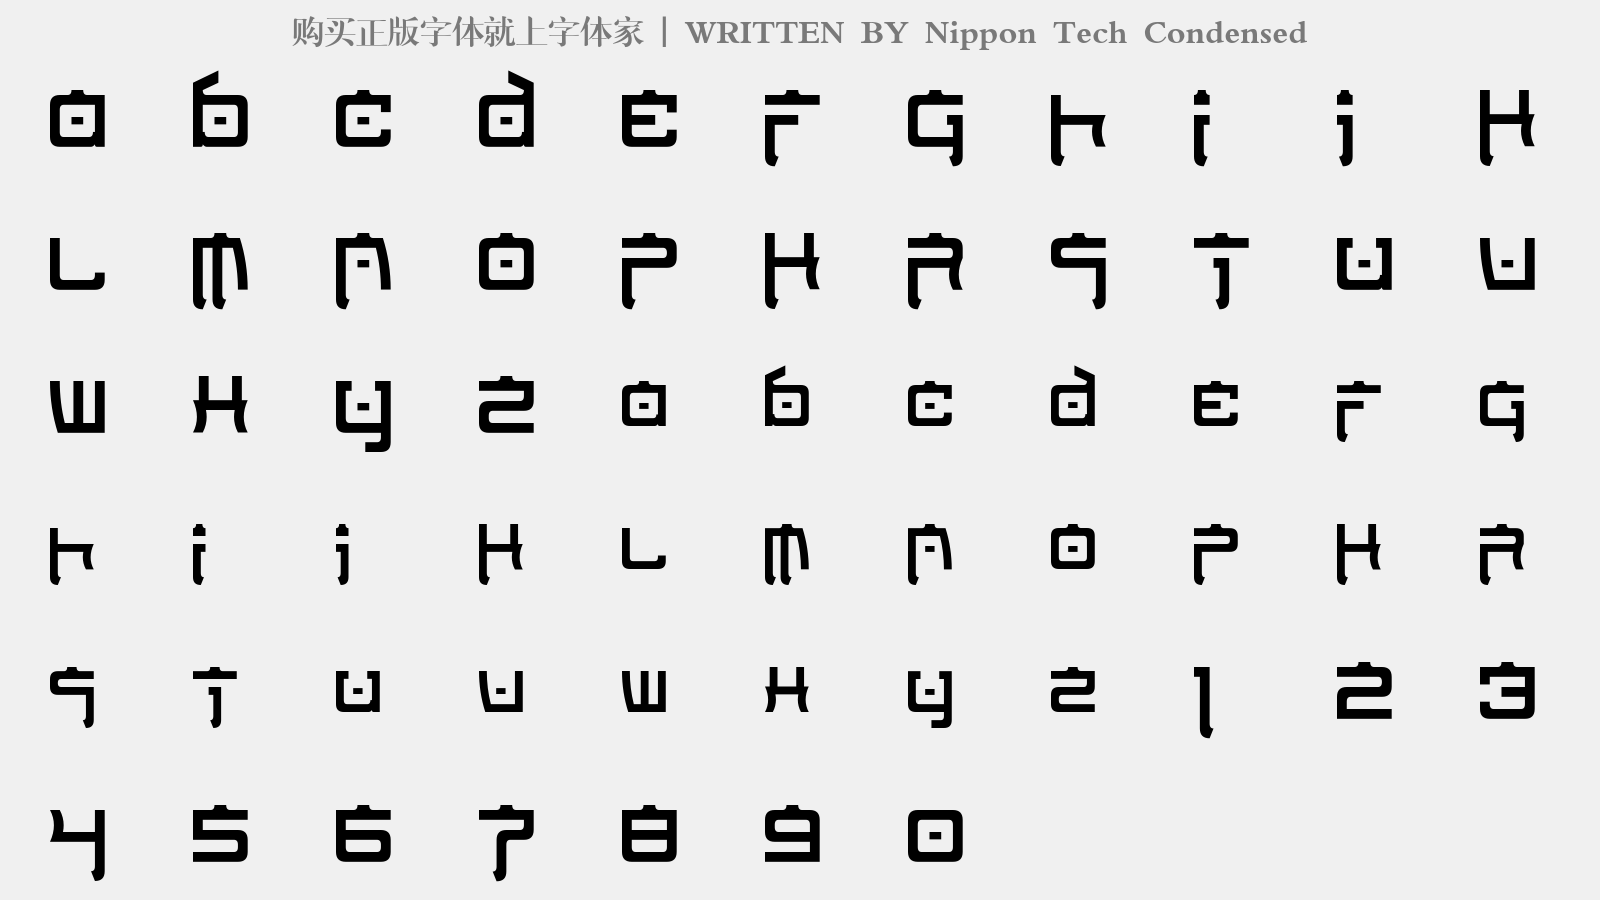 Nippon Tech Condensed - 大写字母/小写字母/数字